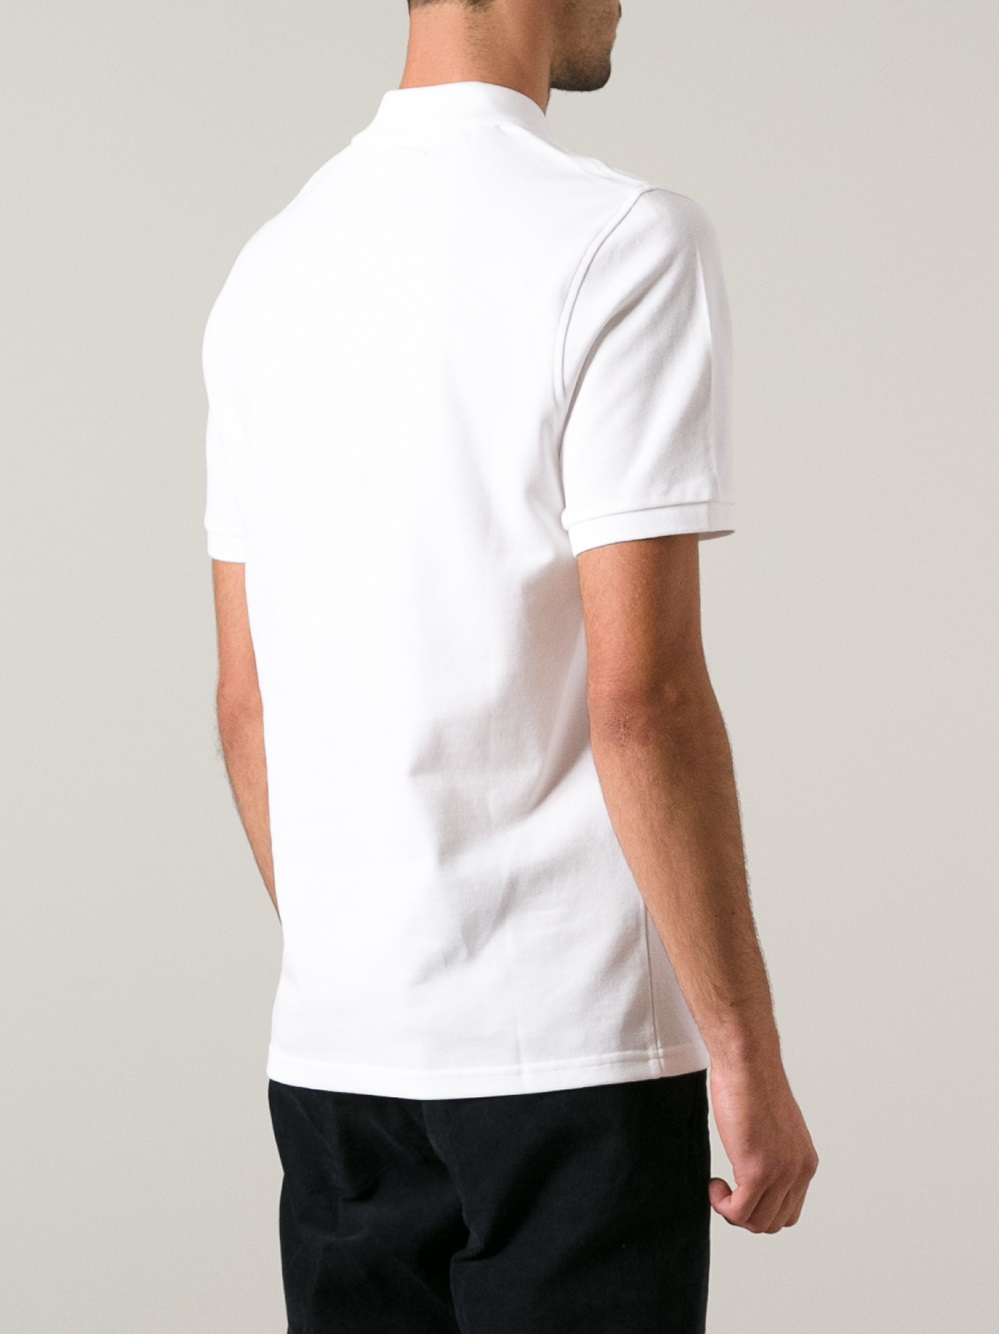 KENZO Logo Print Polo Shirt in White for Men - Lyst